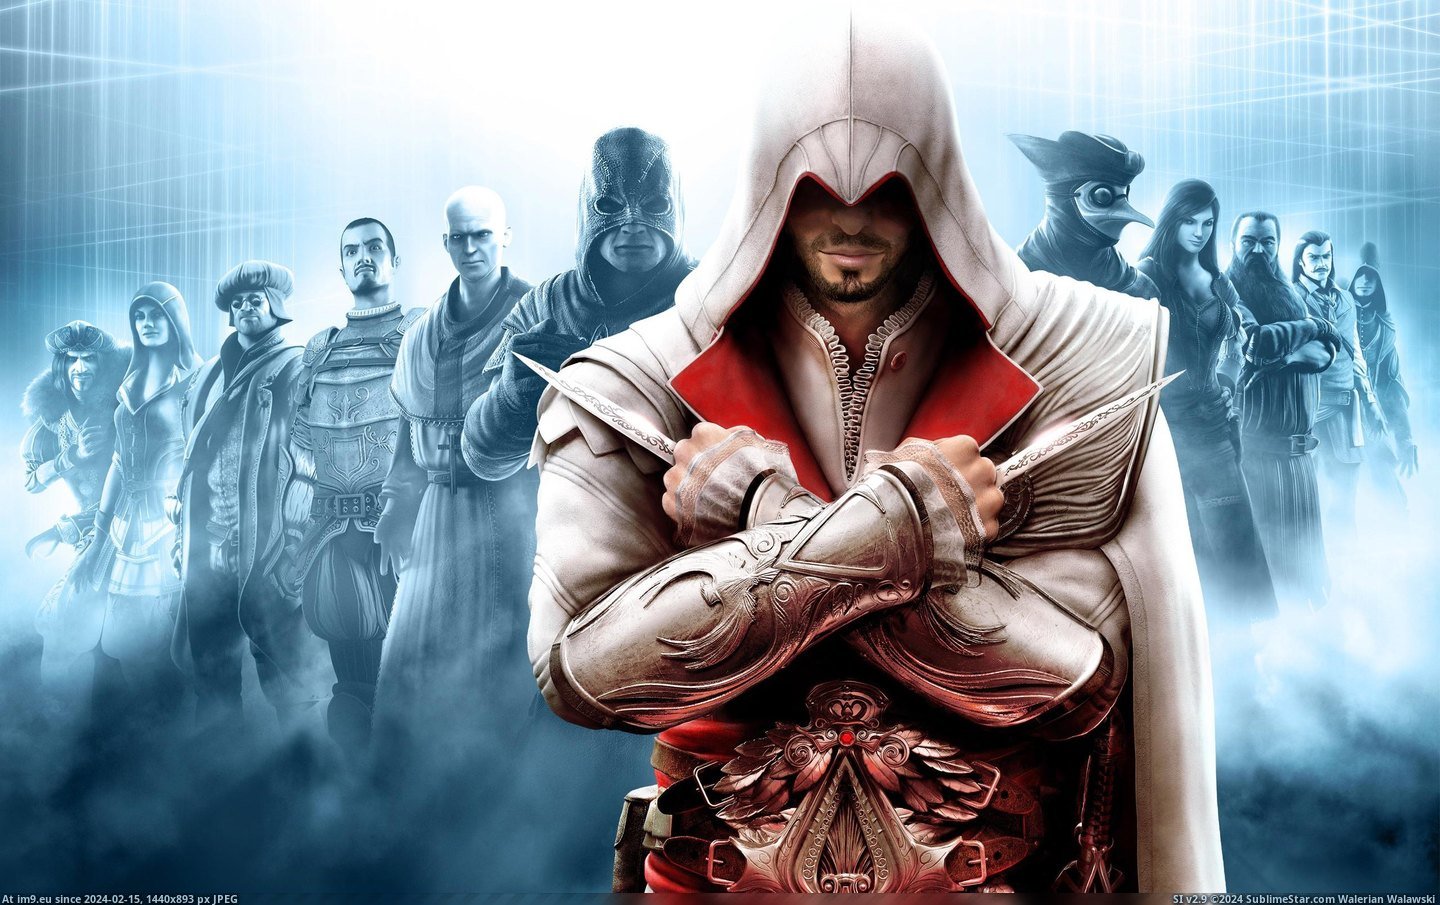 #Wallpaper #Wide #Brotherhood #Creed #Assassins Assassins Creed Brotherhood 3 Wide HD Wallpaper Pic. (Obraz z album Unique HD Wallpapers))